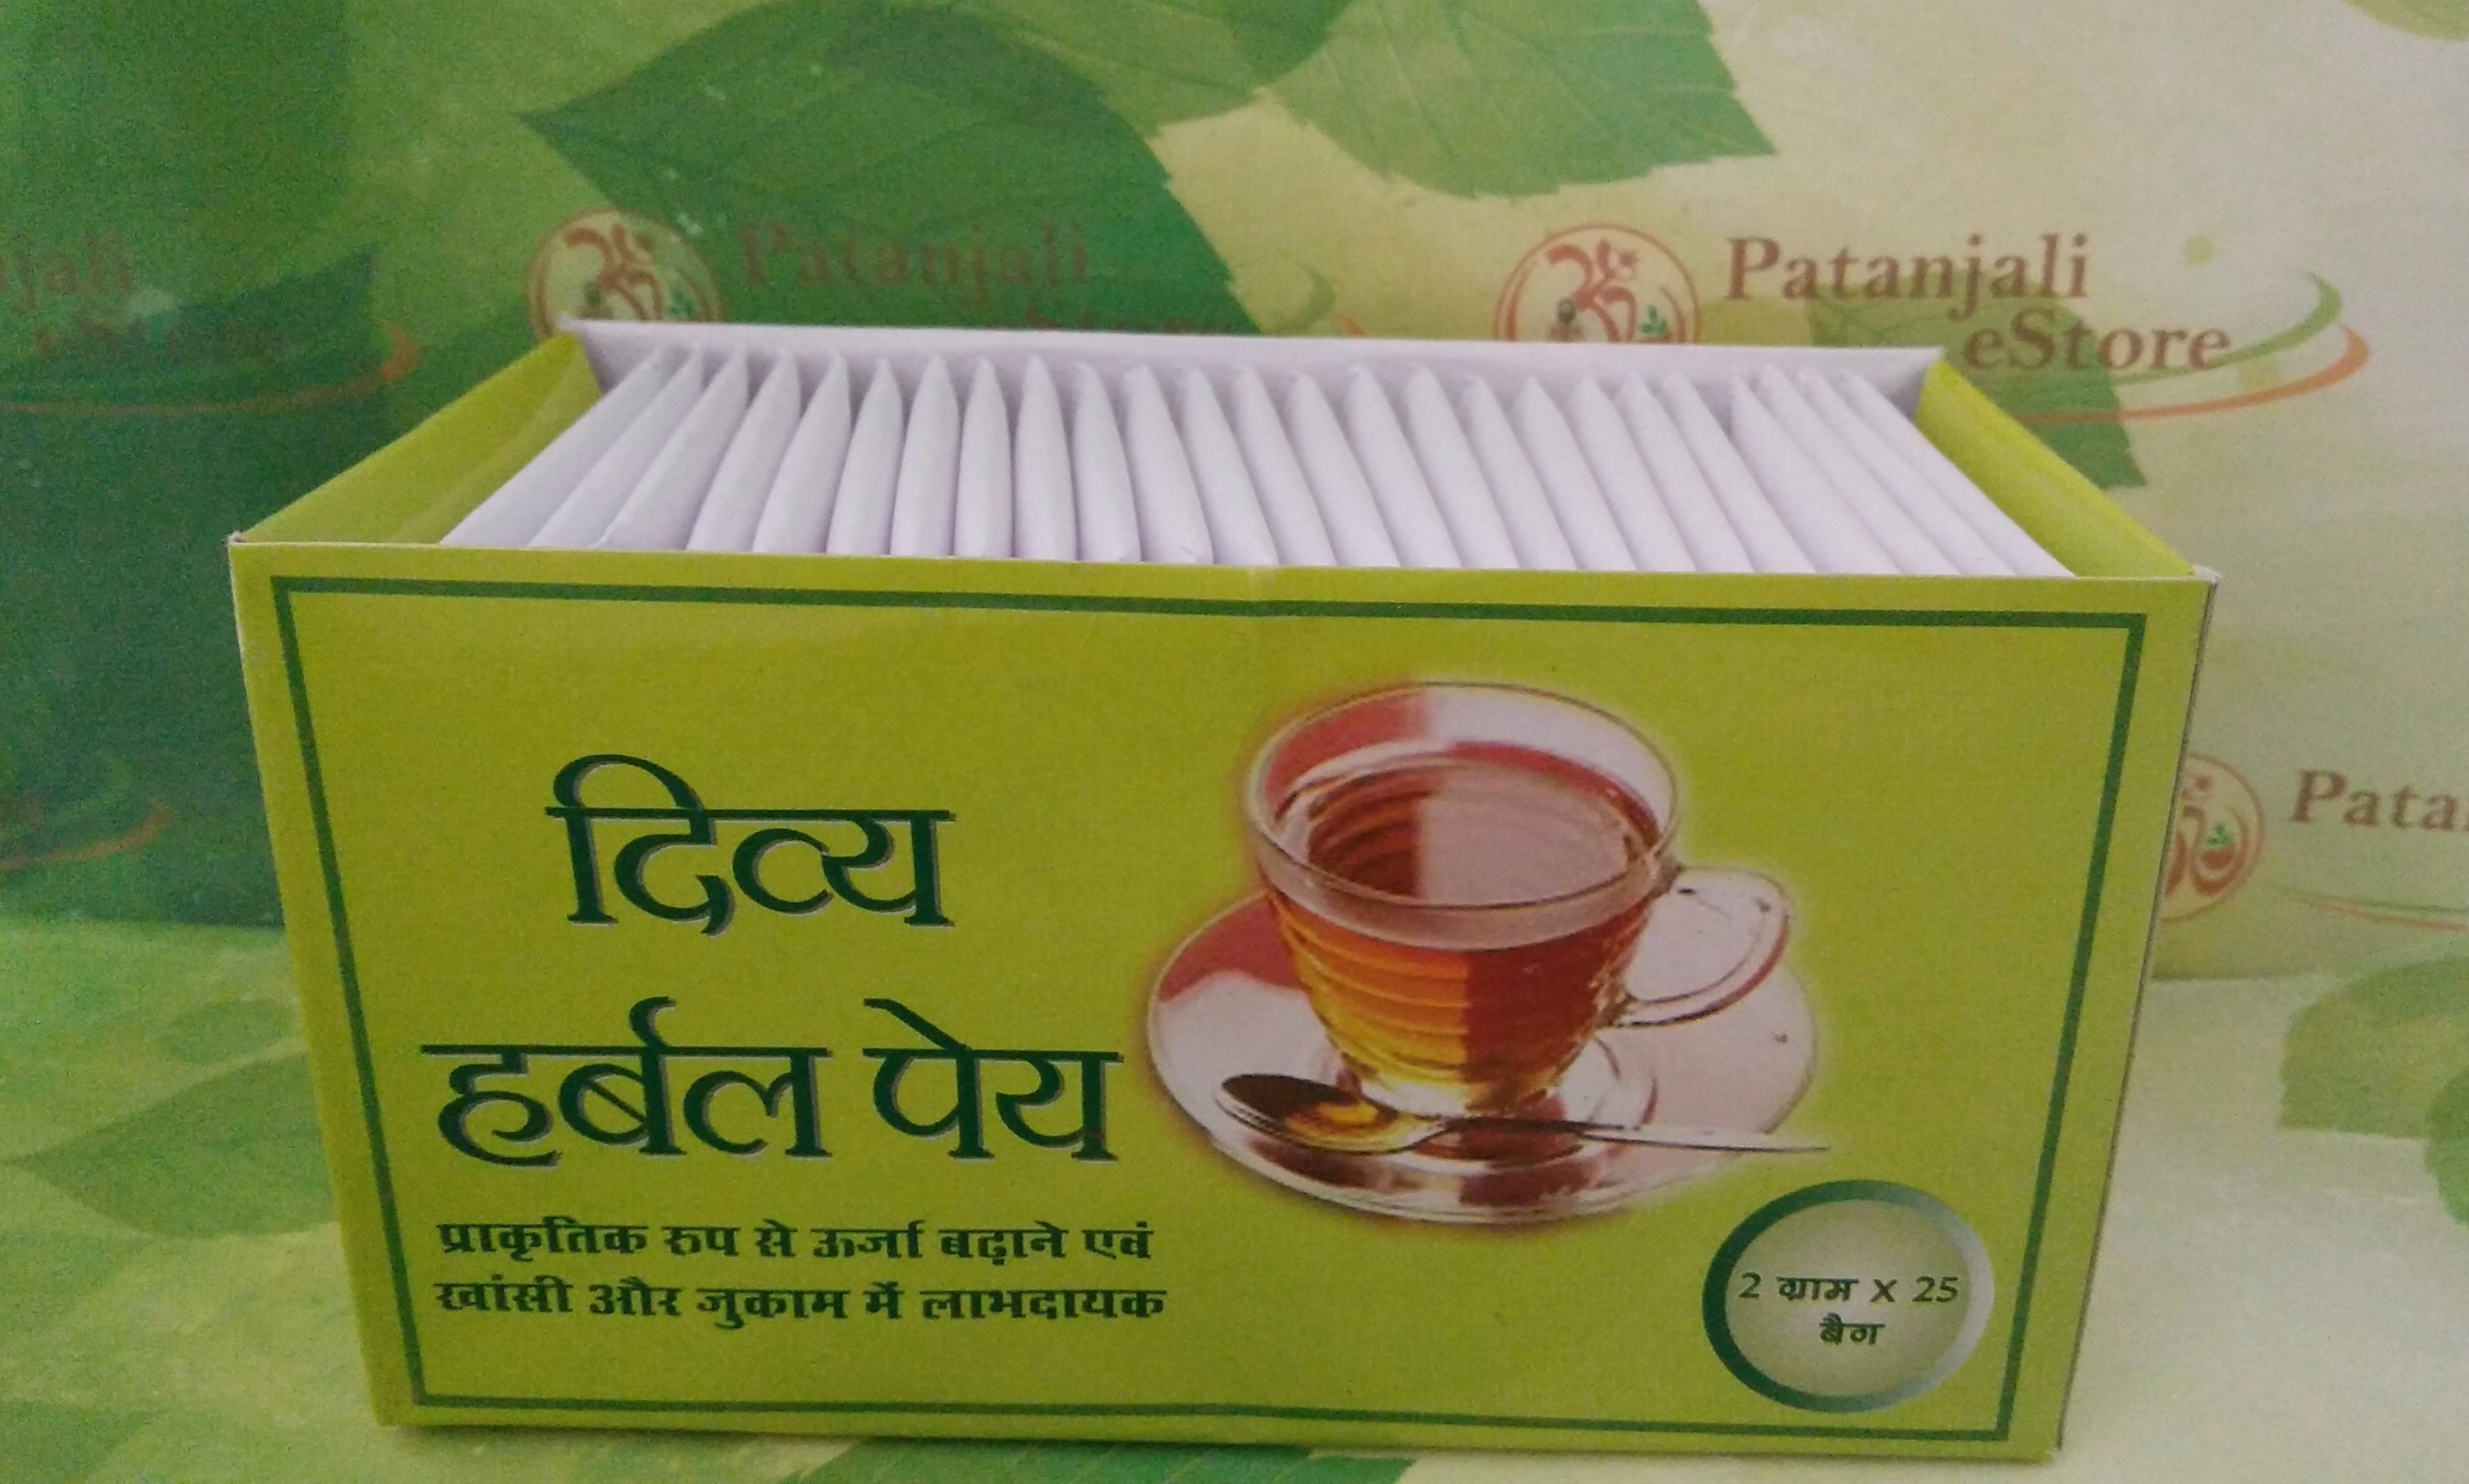 Patanjali Divya Peya Herbal Tea